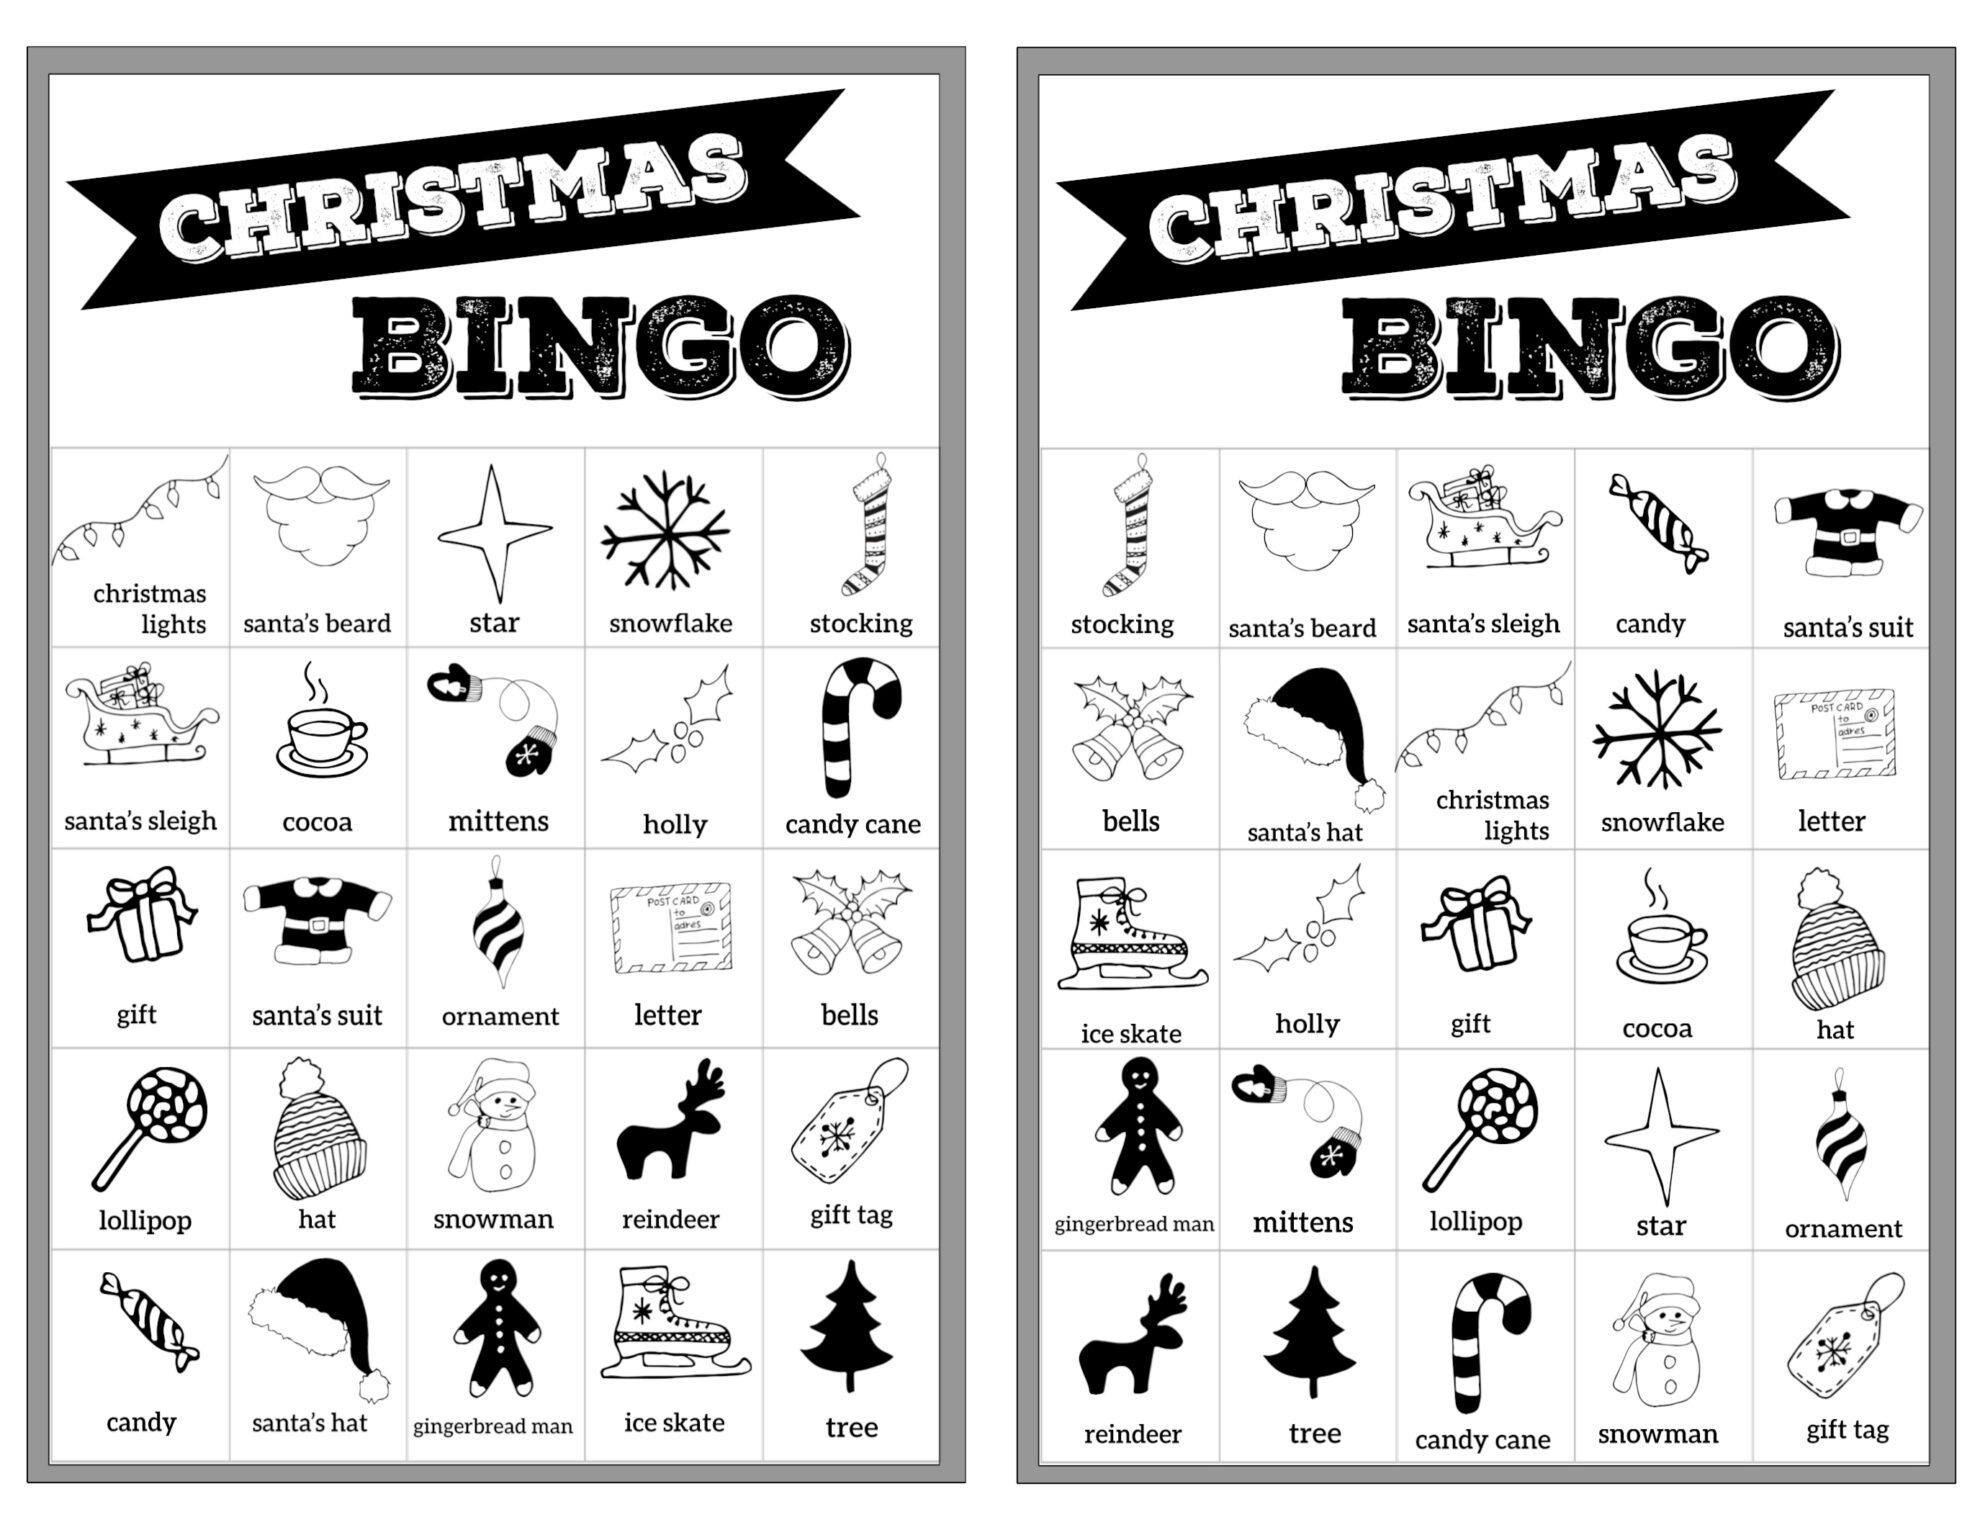 Free Christmas Bingo Printable Cards - Paper Trail Design - Free Printable Bingo Cards For Large Groups